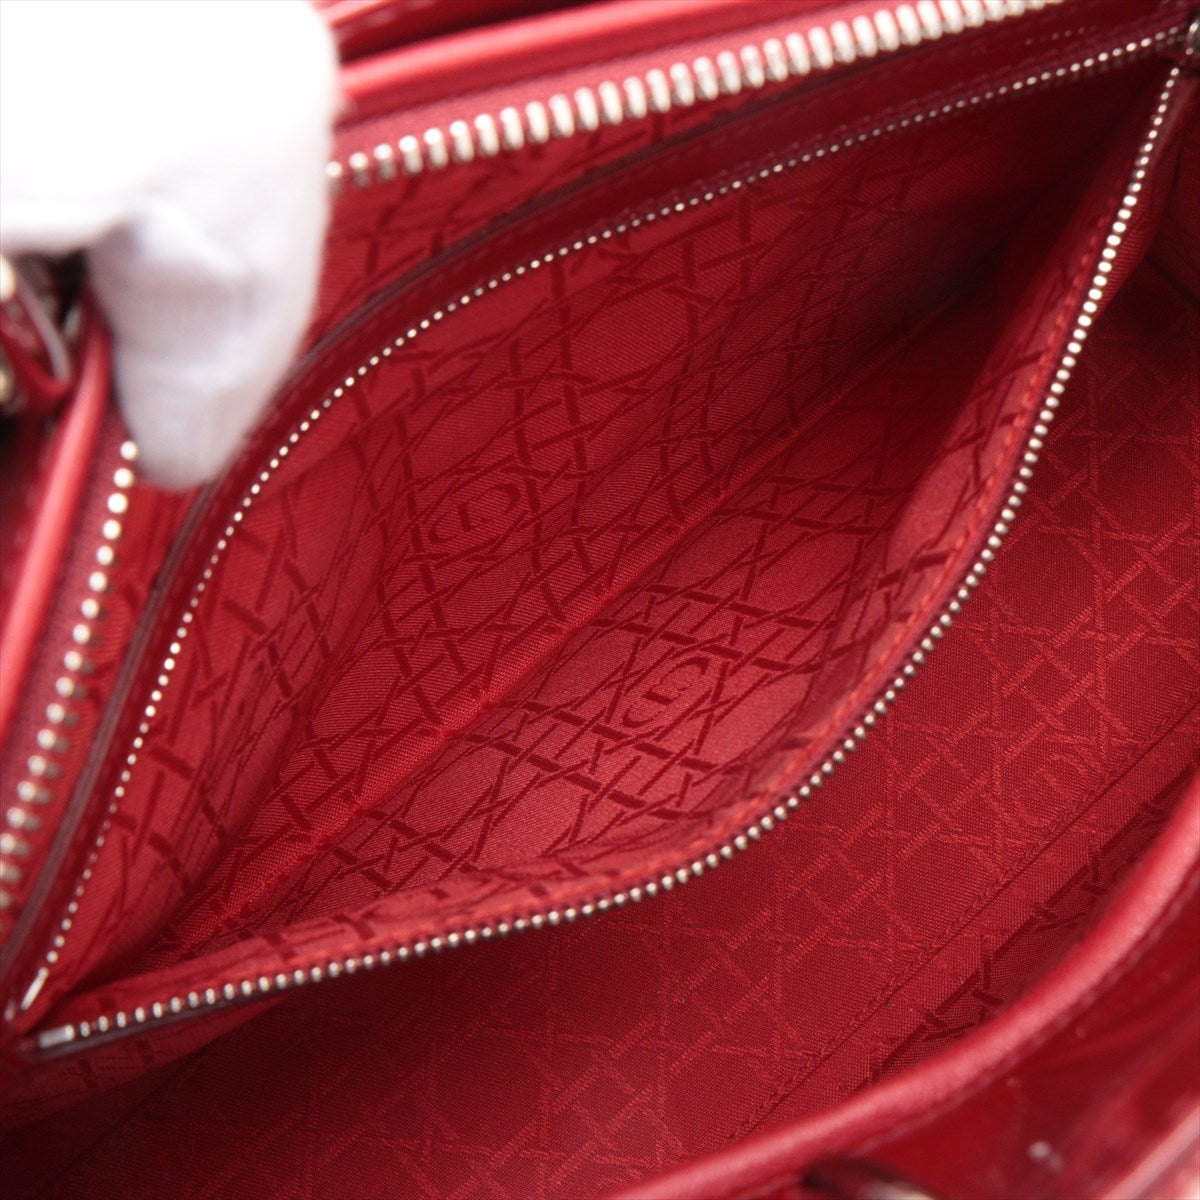 Christian Dior  Dior Patent Leather 2WAY Handbag Red Ride